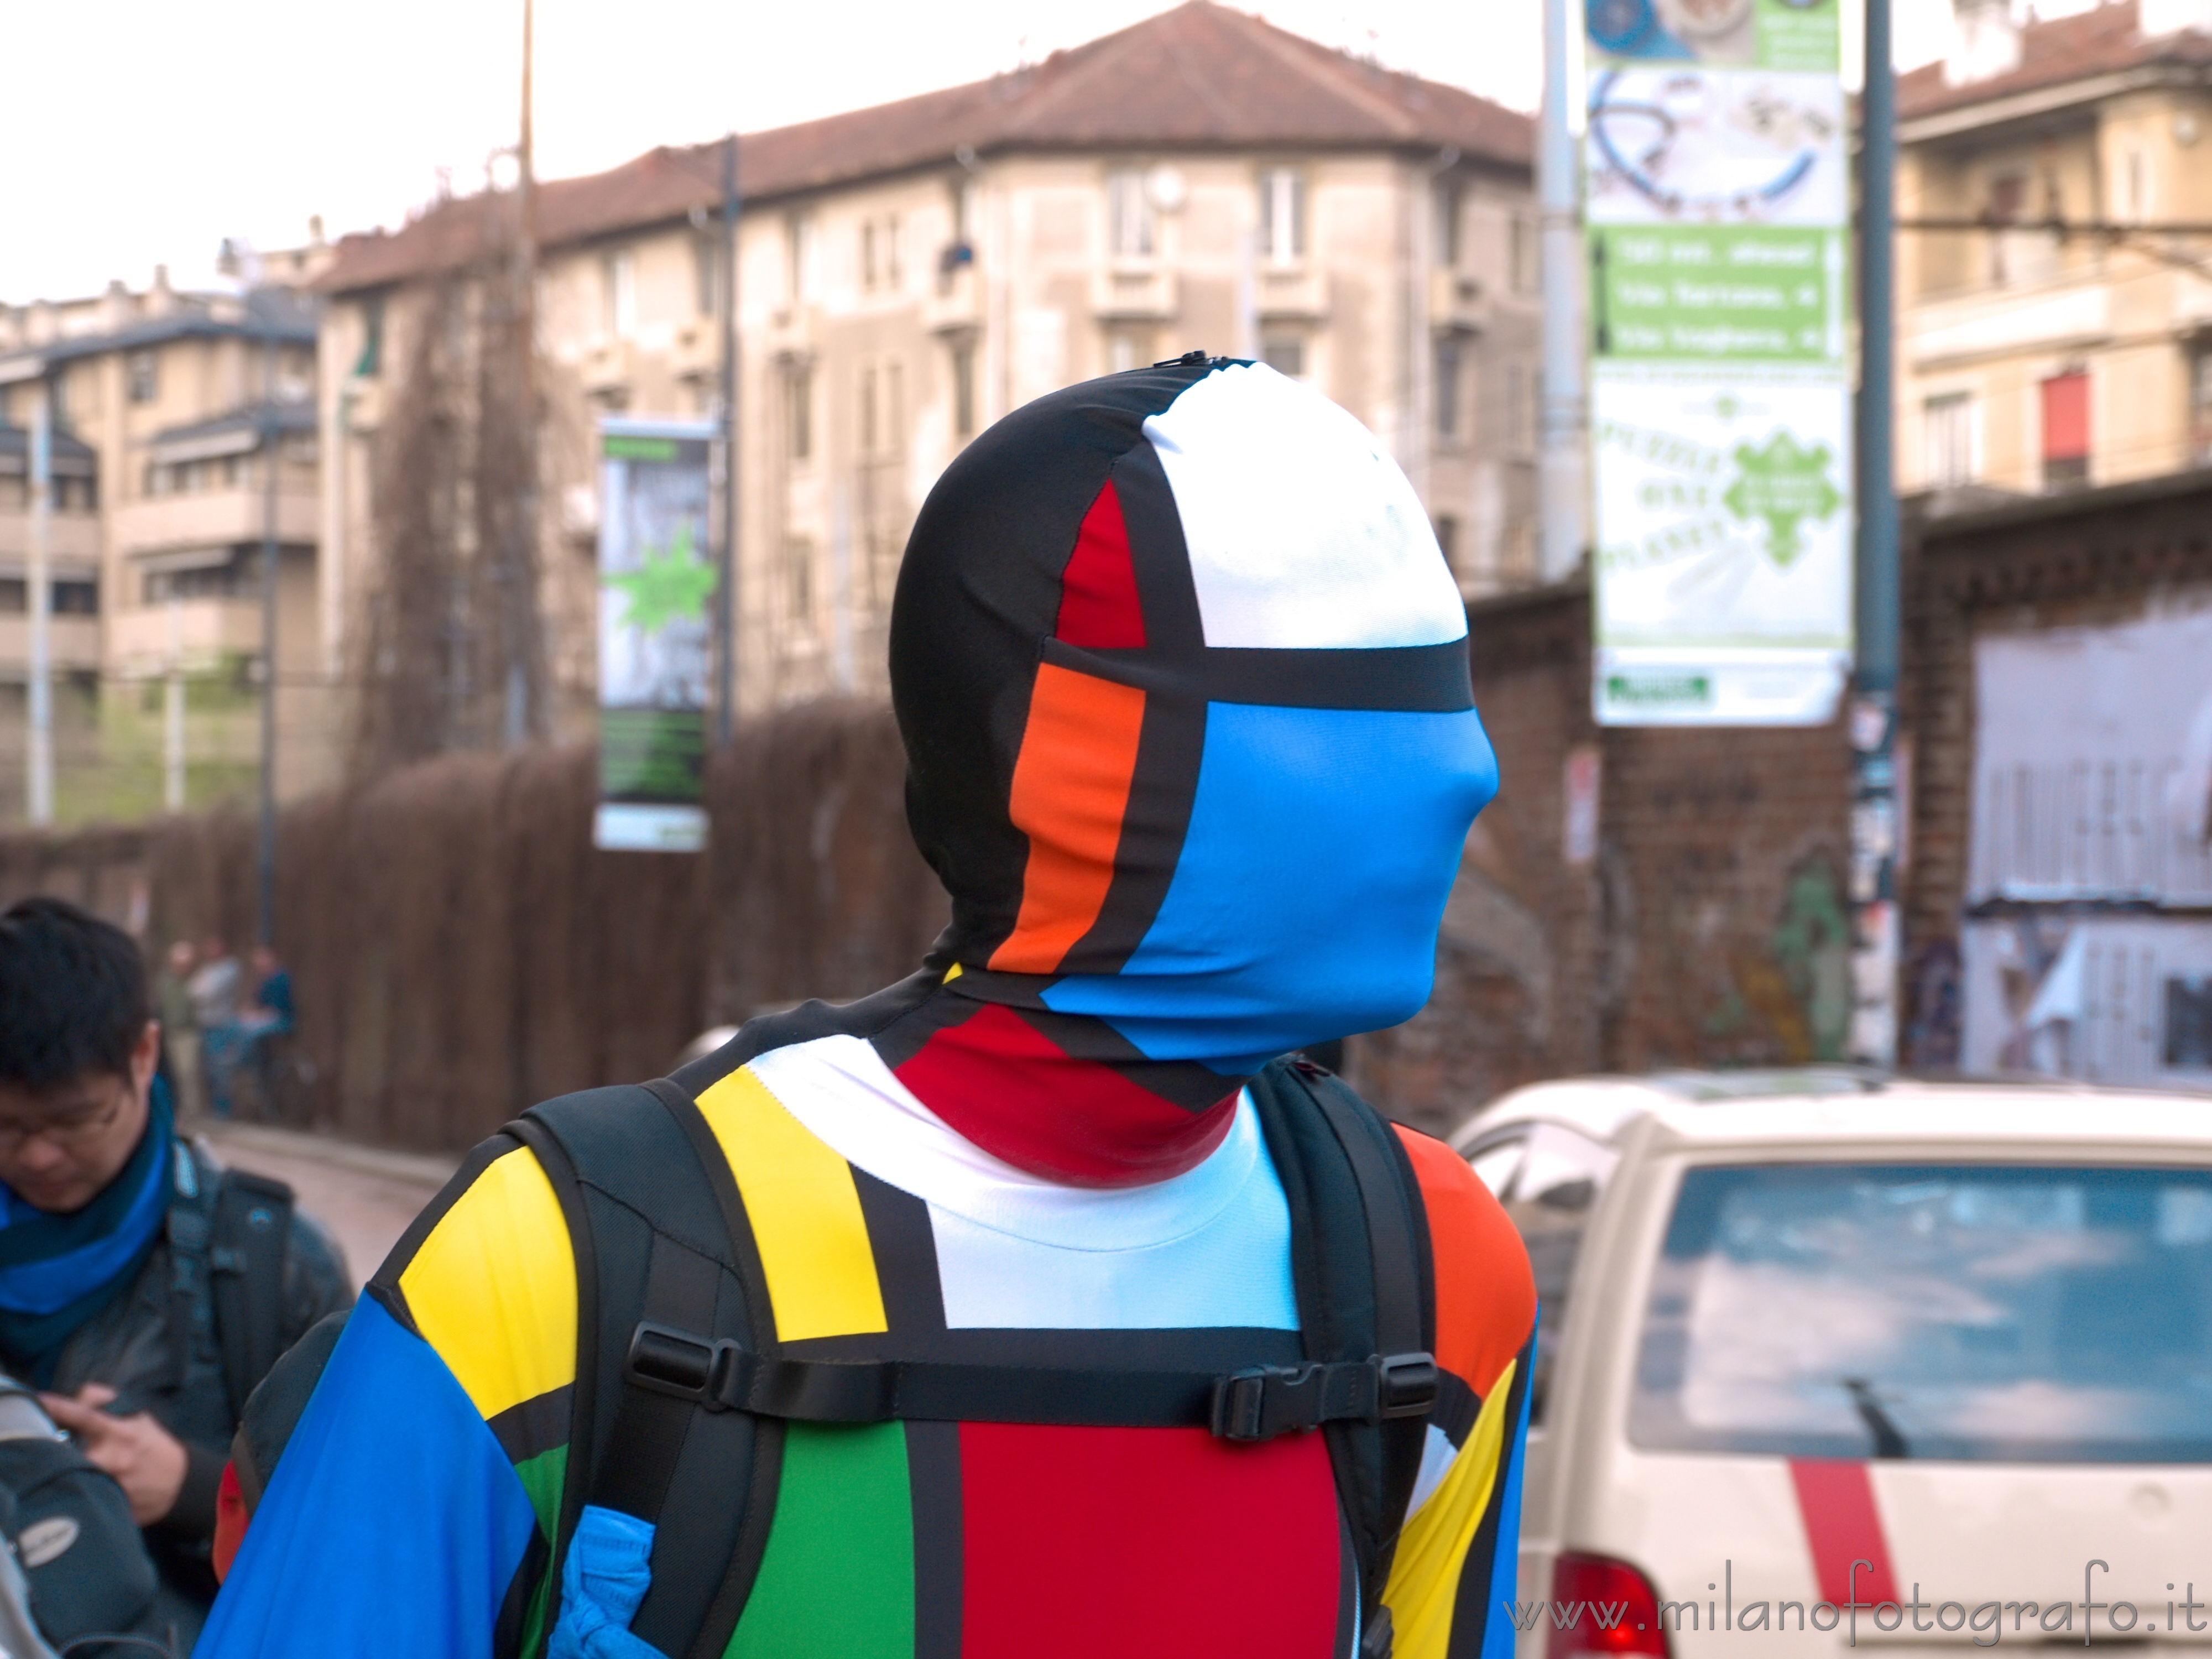 Milan (Italy): Advertising man Mondrian style at Fuorisalone 2013 - Milan (Italy)